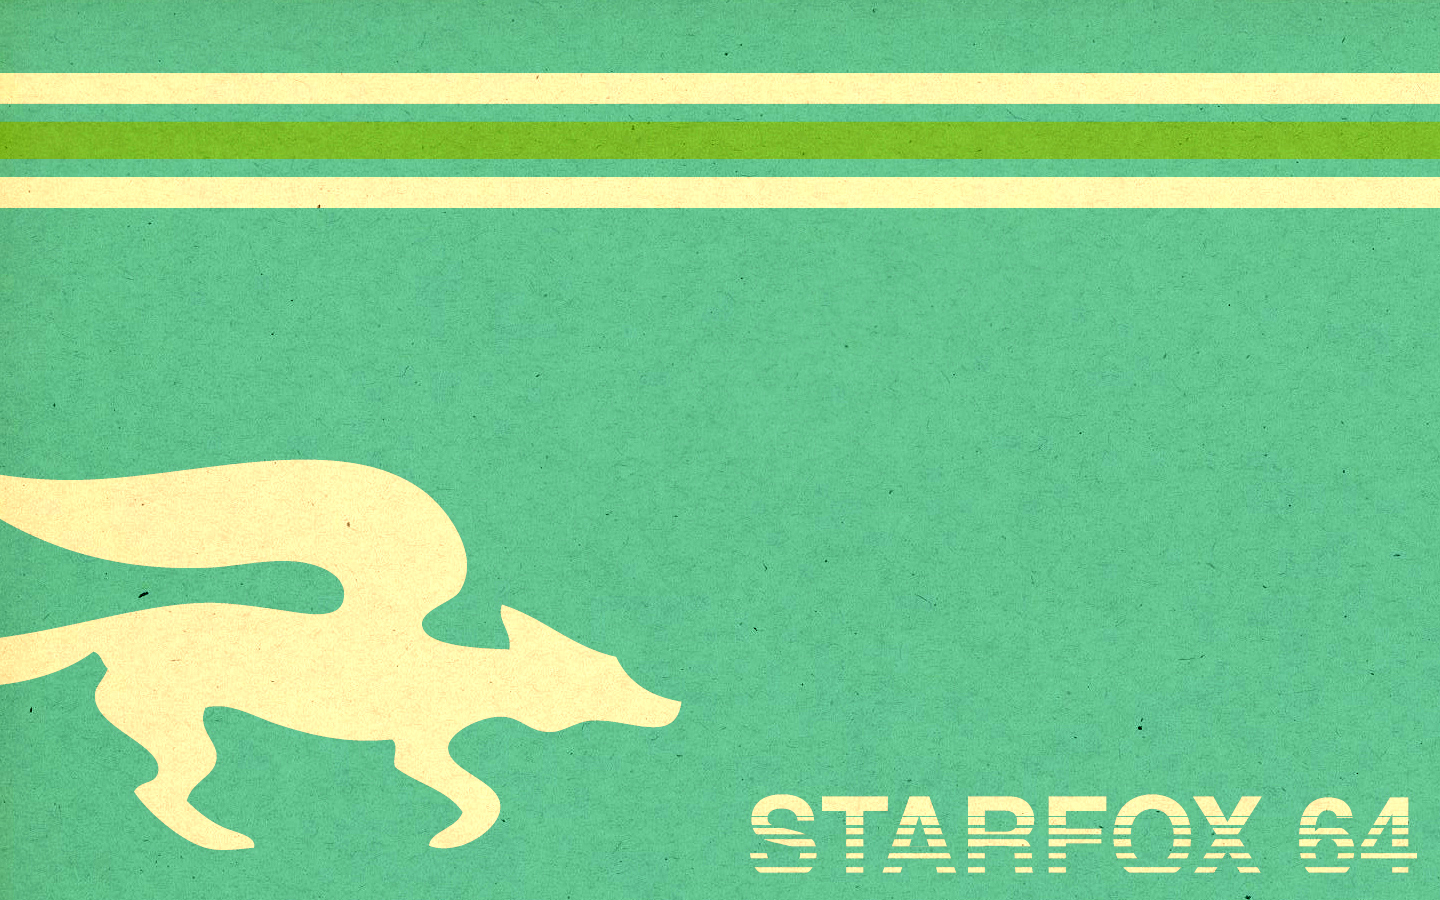 Star Fox 64 Wallpapers | Just Good Vibe